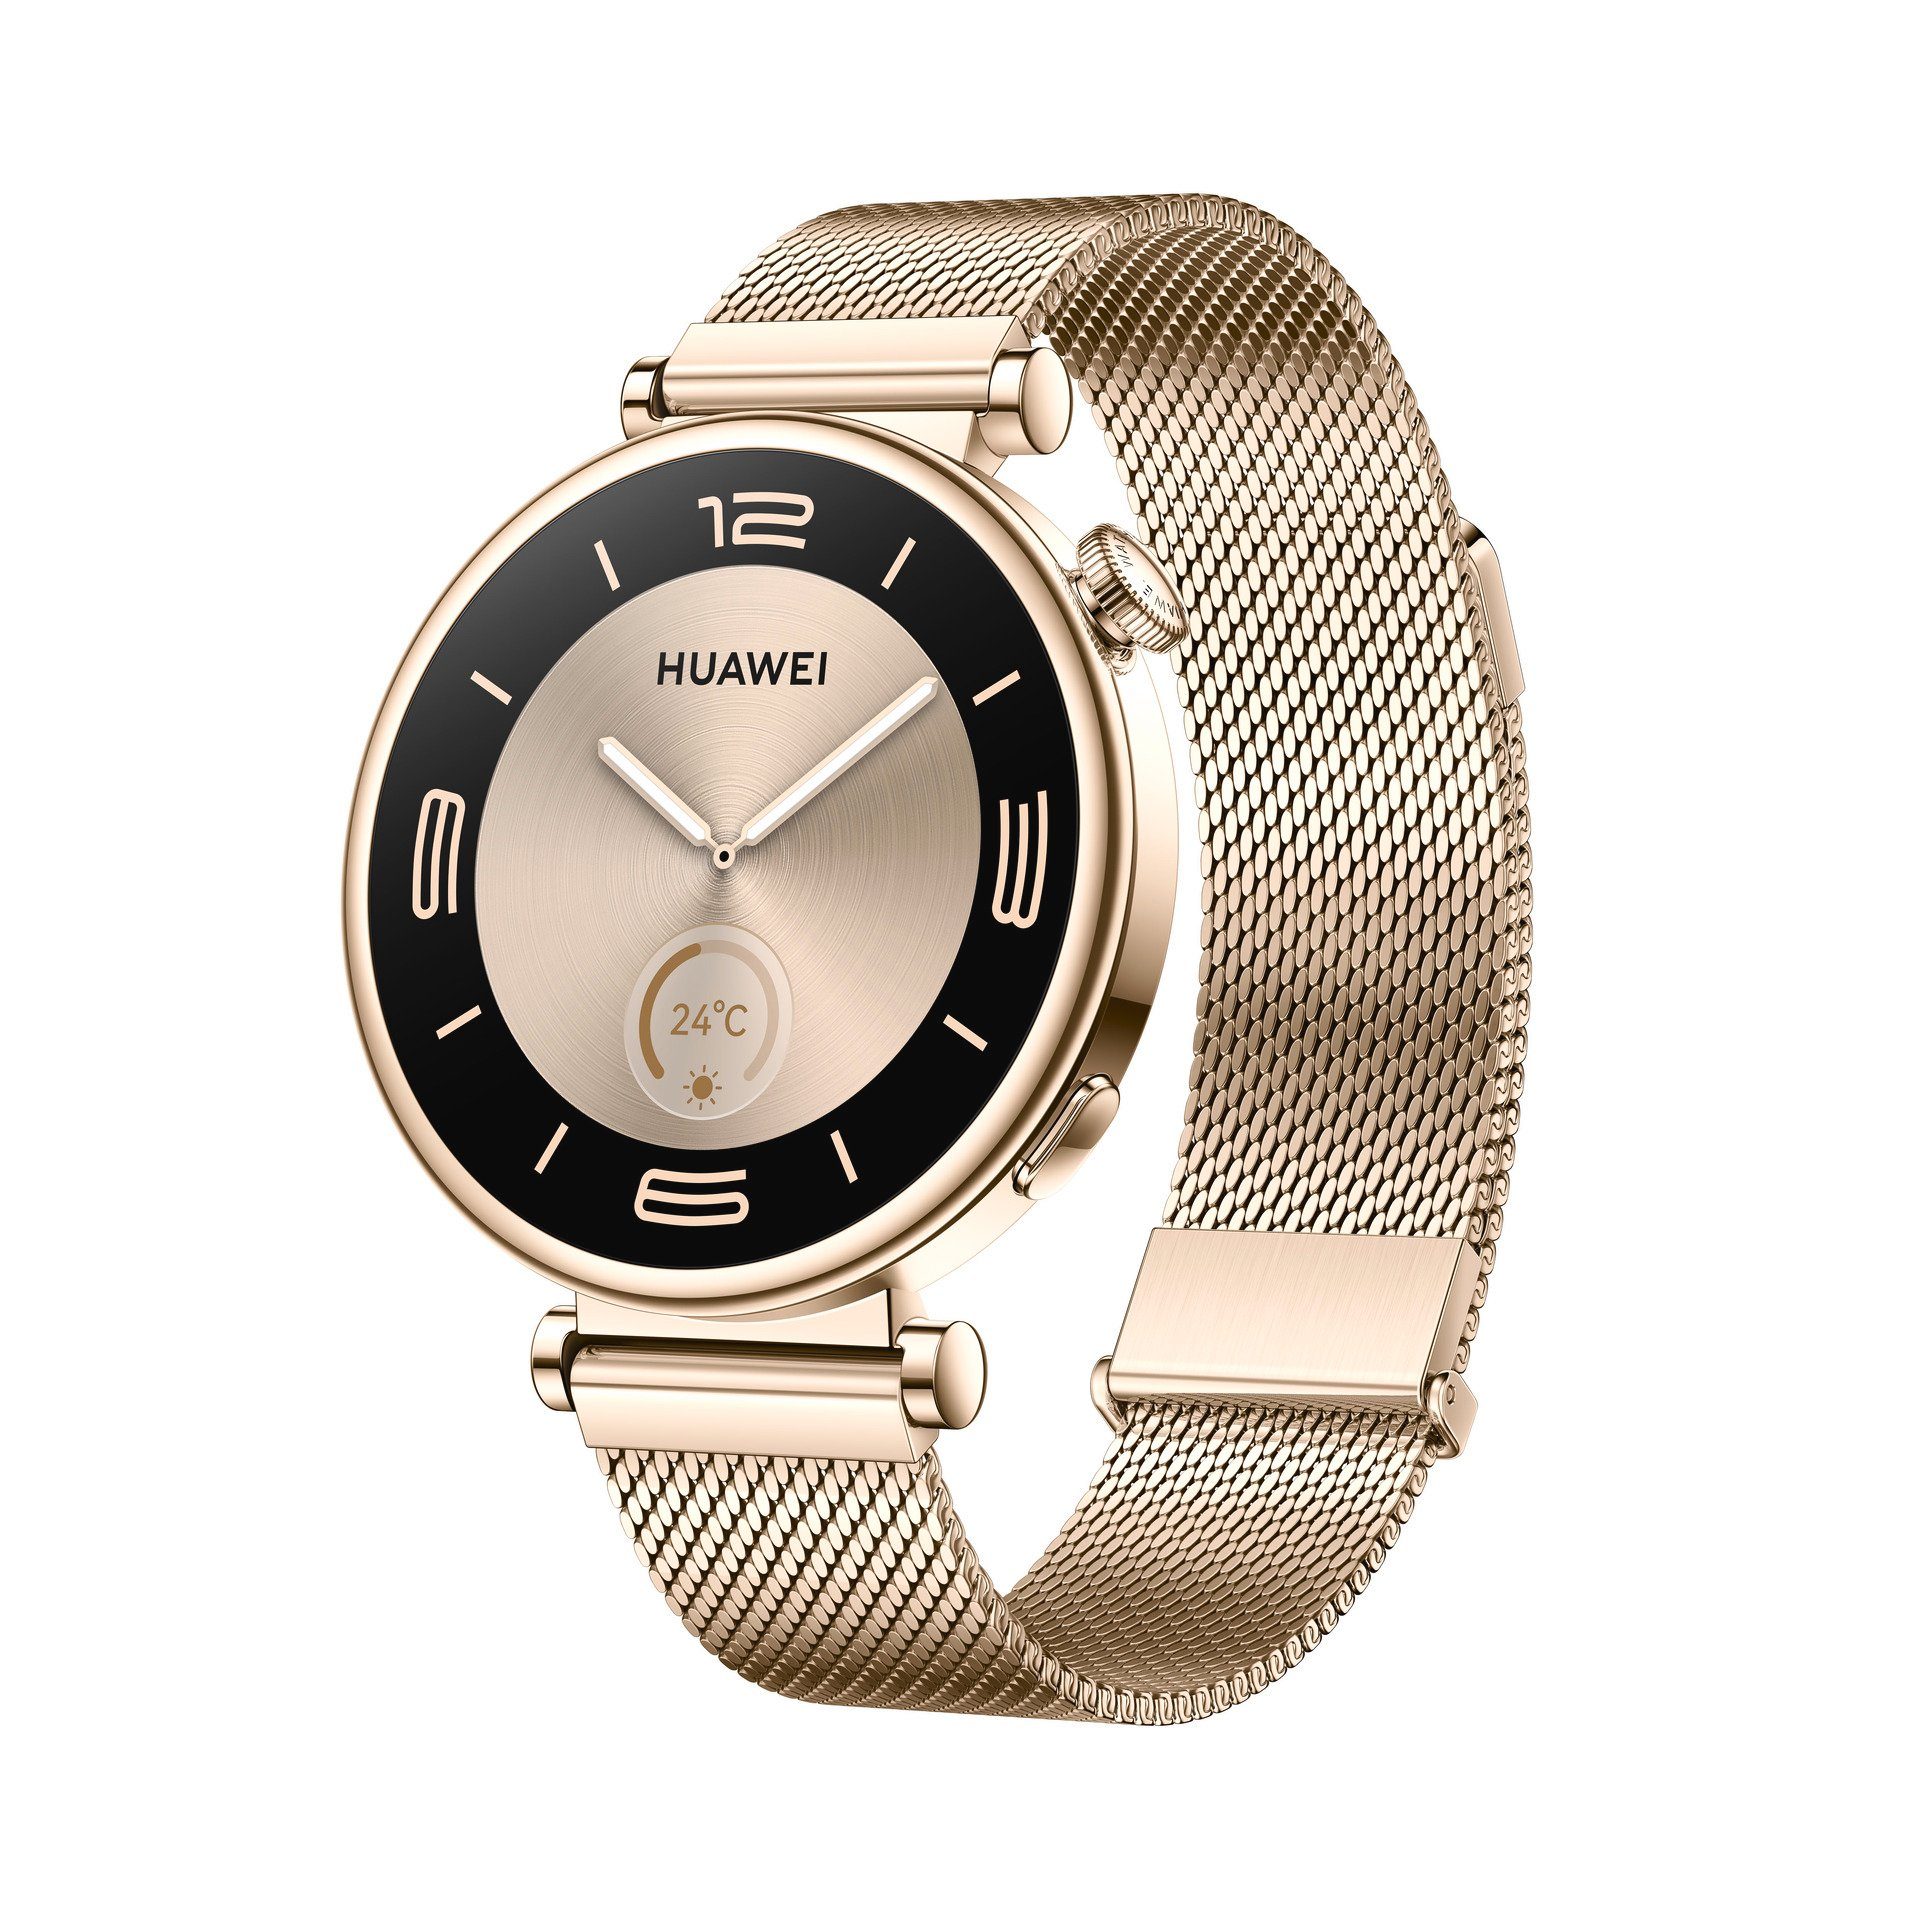 cm/1,32 | Zoll) Huawei gold GT4 Smartwatch Gold Watch 41mm (3,35